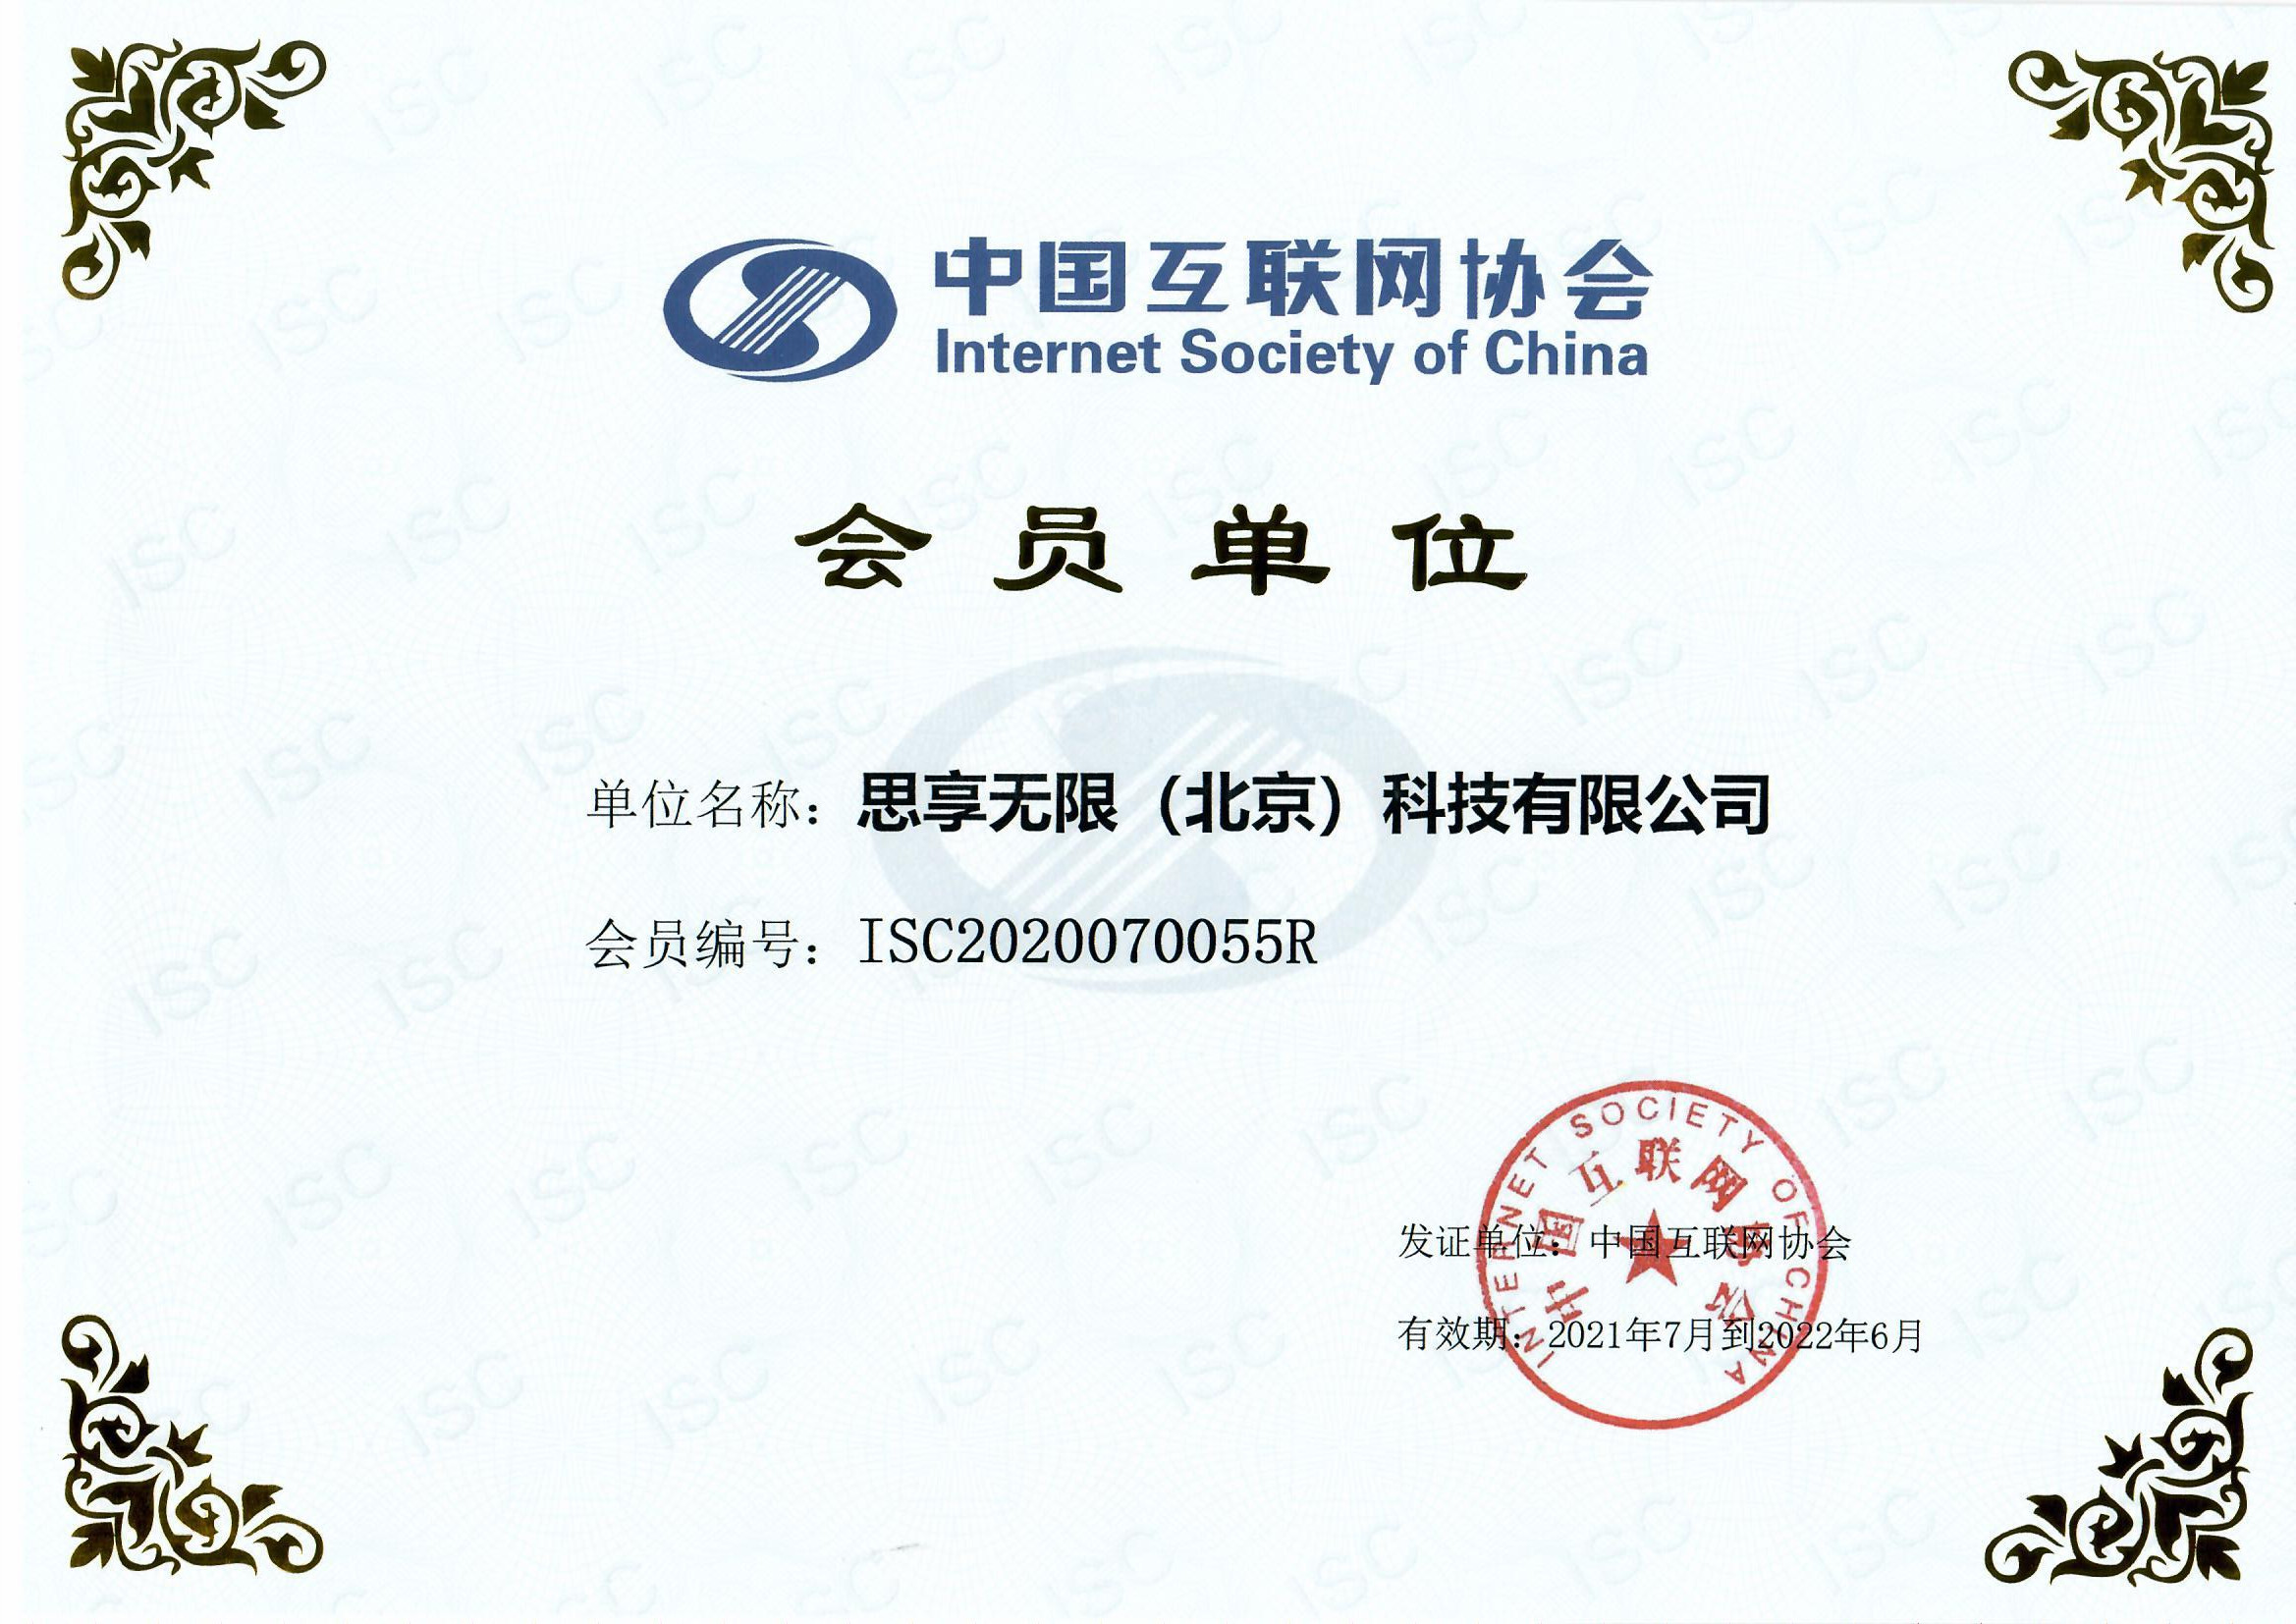                             Member unit of Internet Society of China
                        